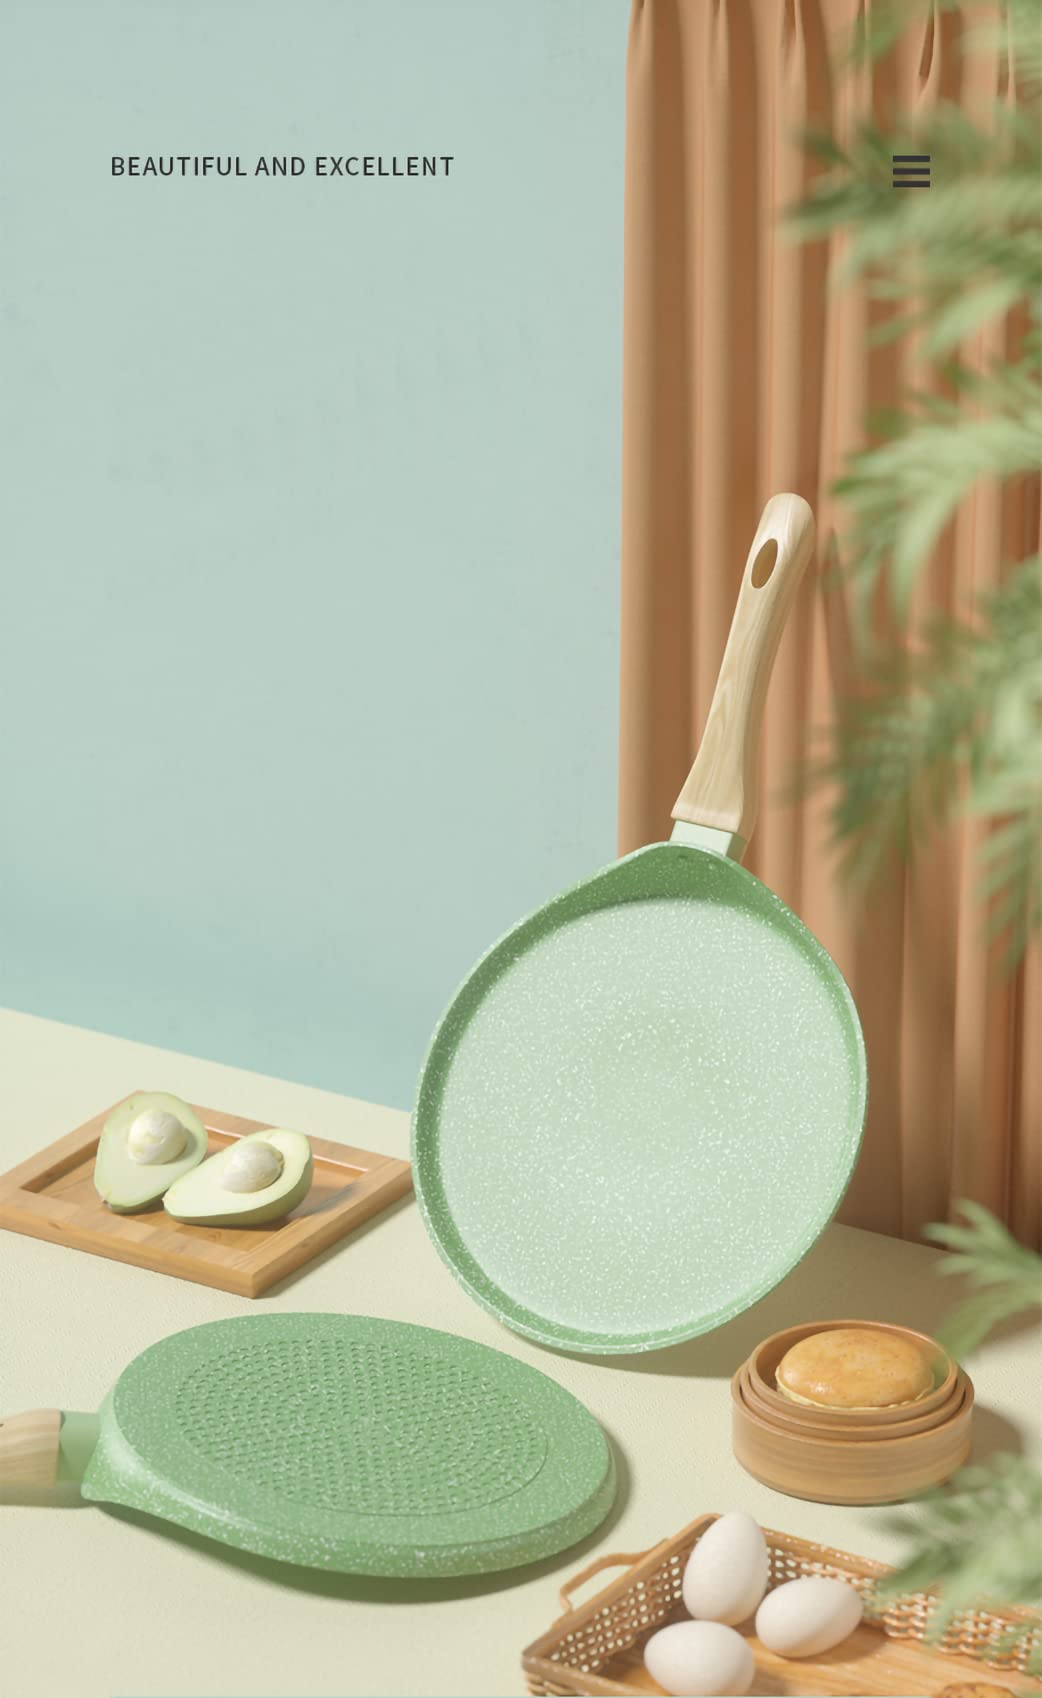 LI-GELISI Double-Sided Non-Stick Nonstick Crepe Pan, Swiss Granite Coating Dosa Pan Pancake Flat Skillet Tawa Griddle PFOA & PTFEs Free Coating (7.1 inch Apple Green)